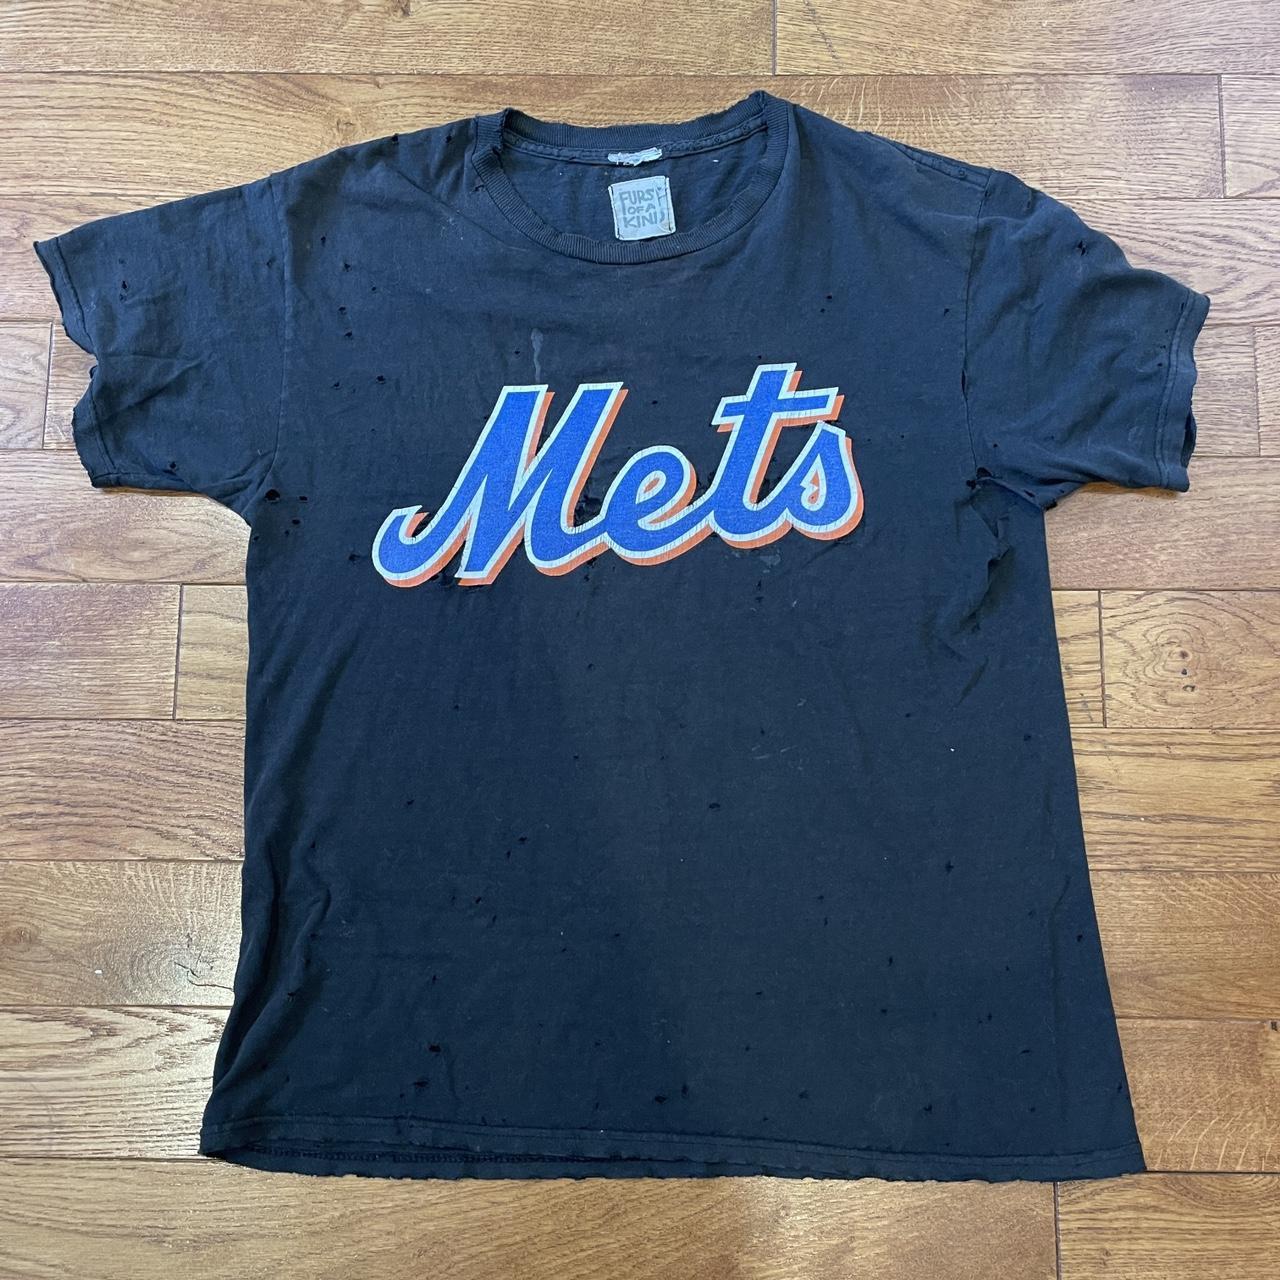 Vintage Majestic NY Mets Shirt Medium Orange Graphic Tee